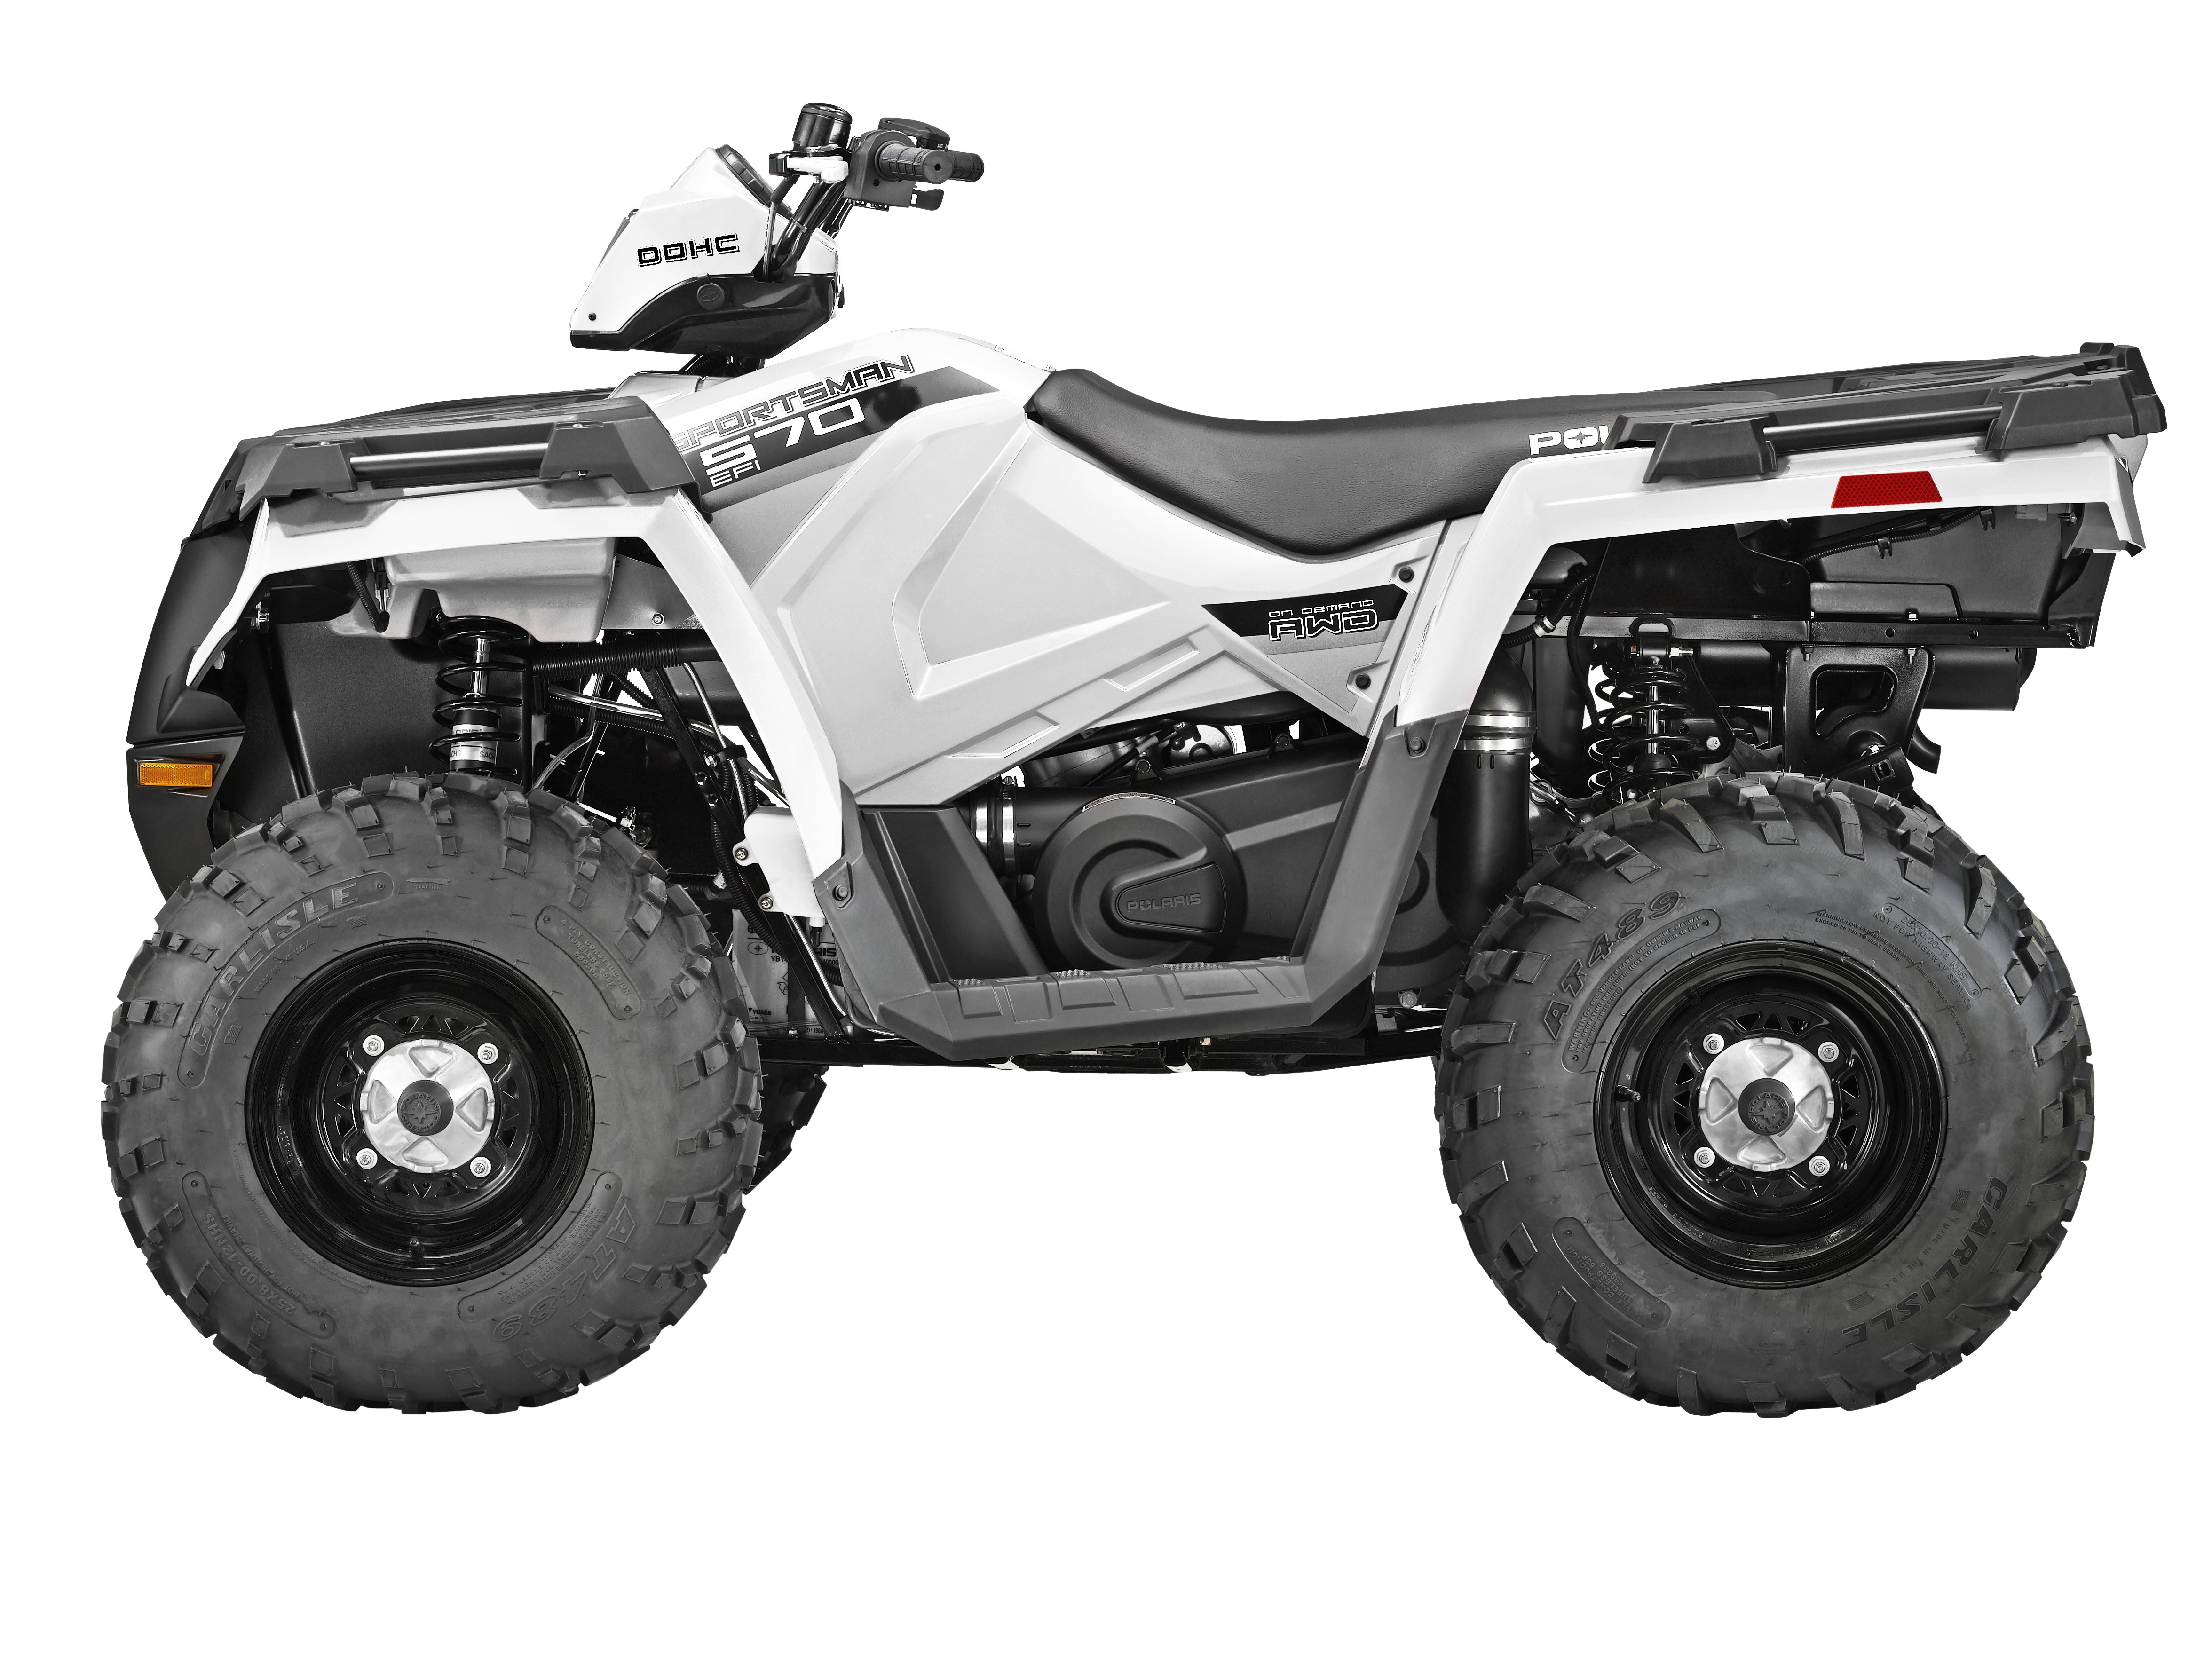 Sportsman 570 all-terrain vehicles (ATVs)